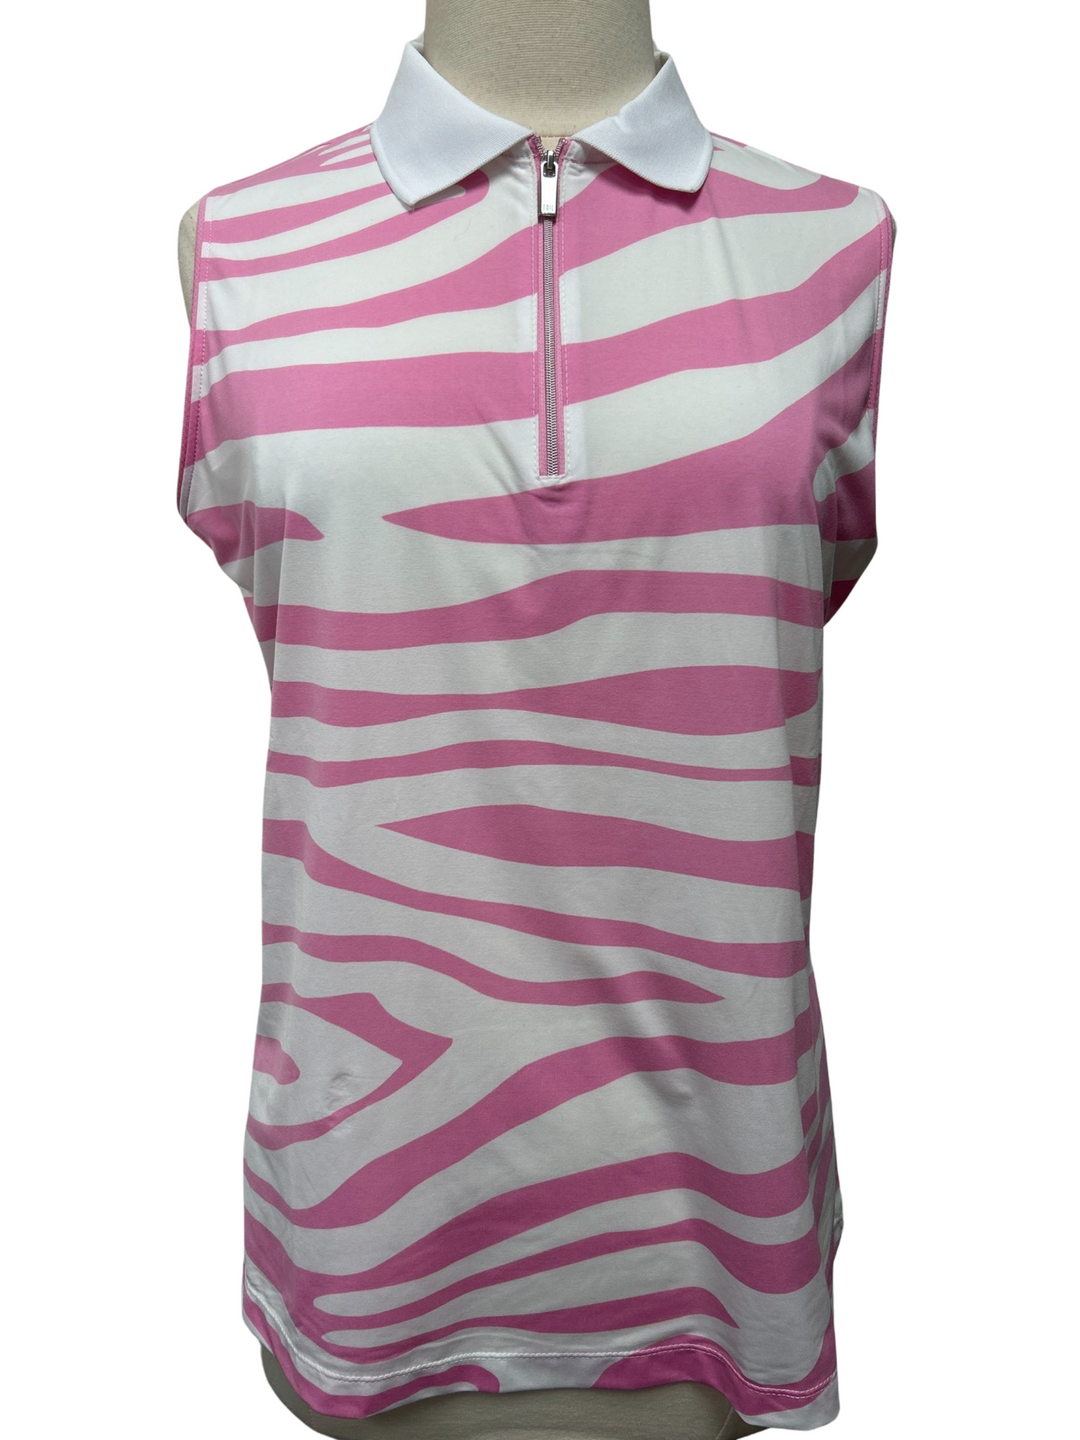 TAIL -Sleeveless Shirt - White and Pink -XL - Skorzie